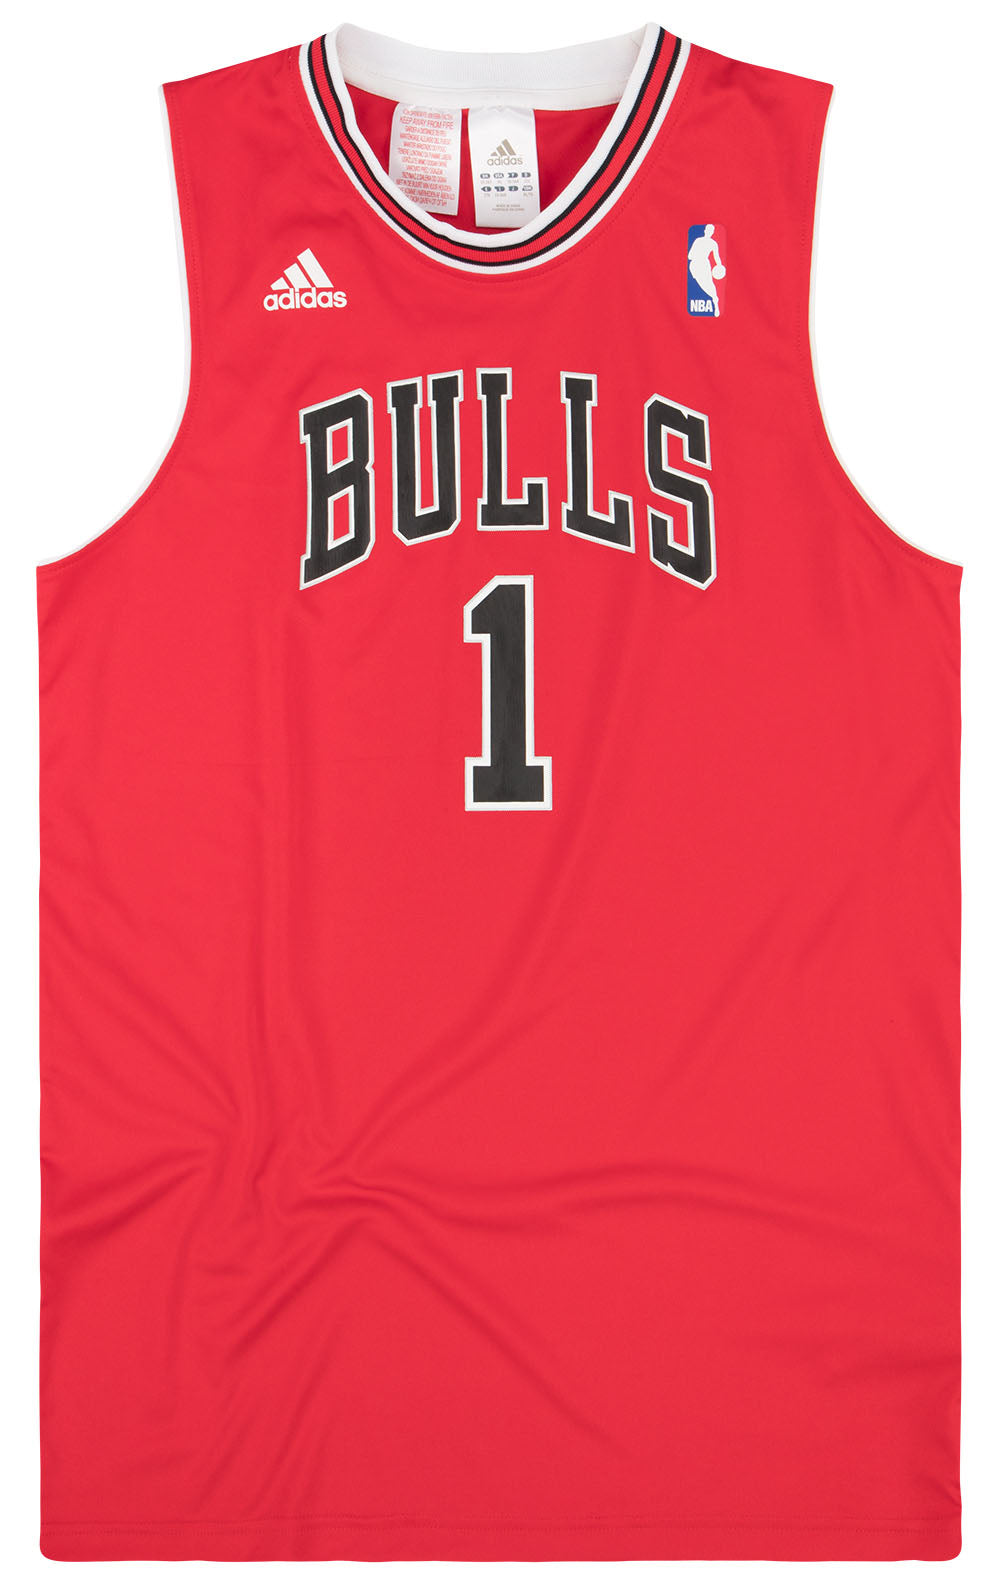 adidas, Shirts, Adidas Nba Chicago Bulls Derrick Rose Tee Shirt